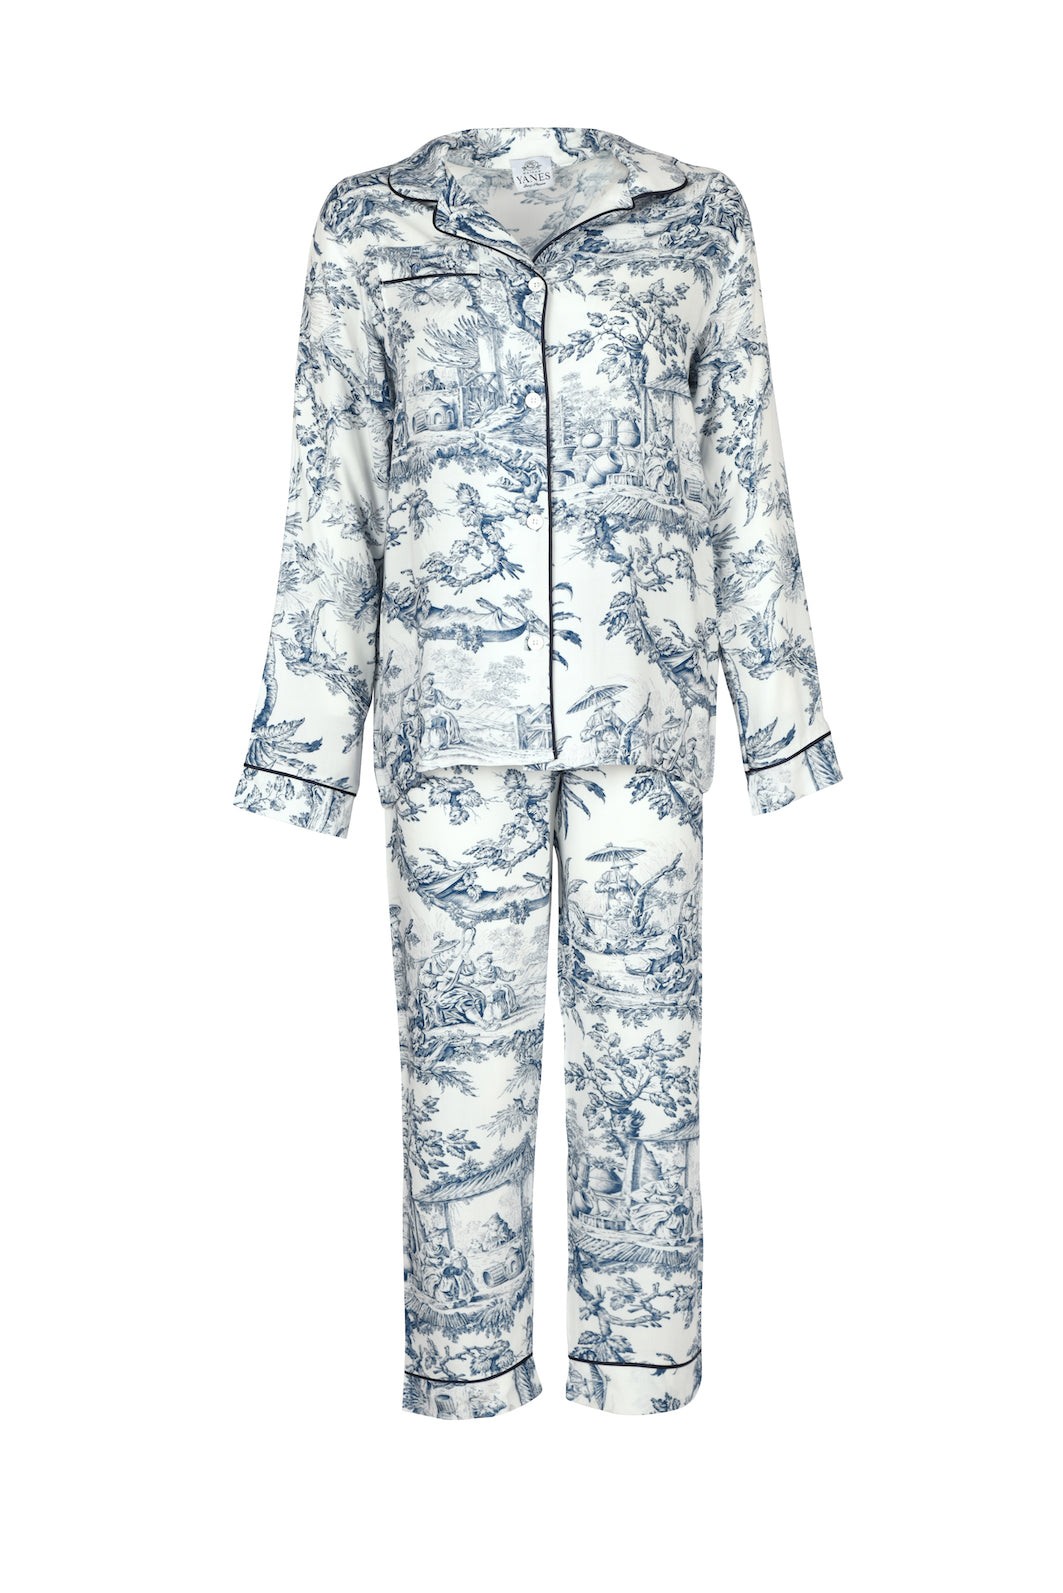 Chinese Garden Women's Pajamas Set